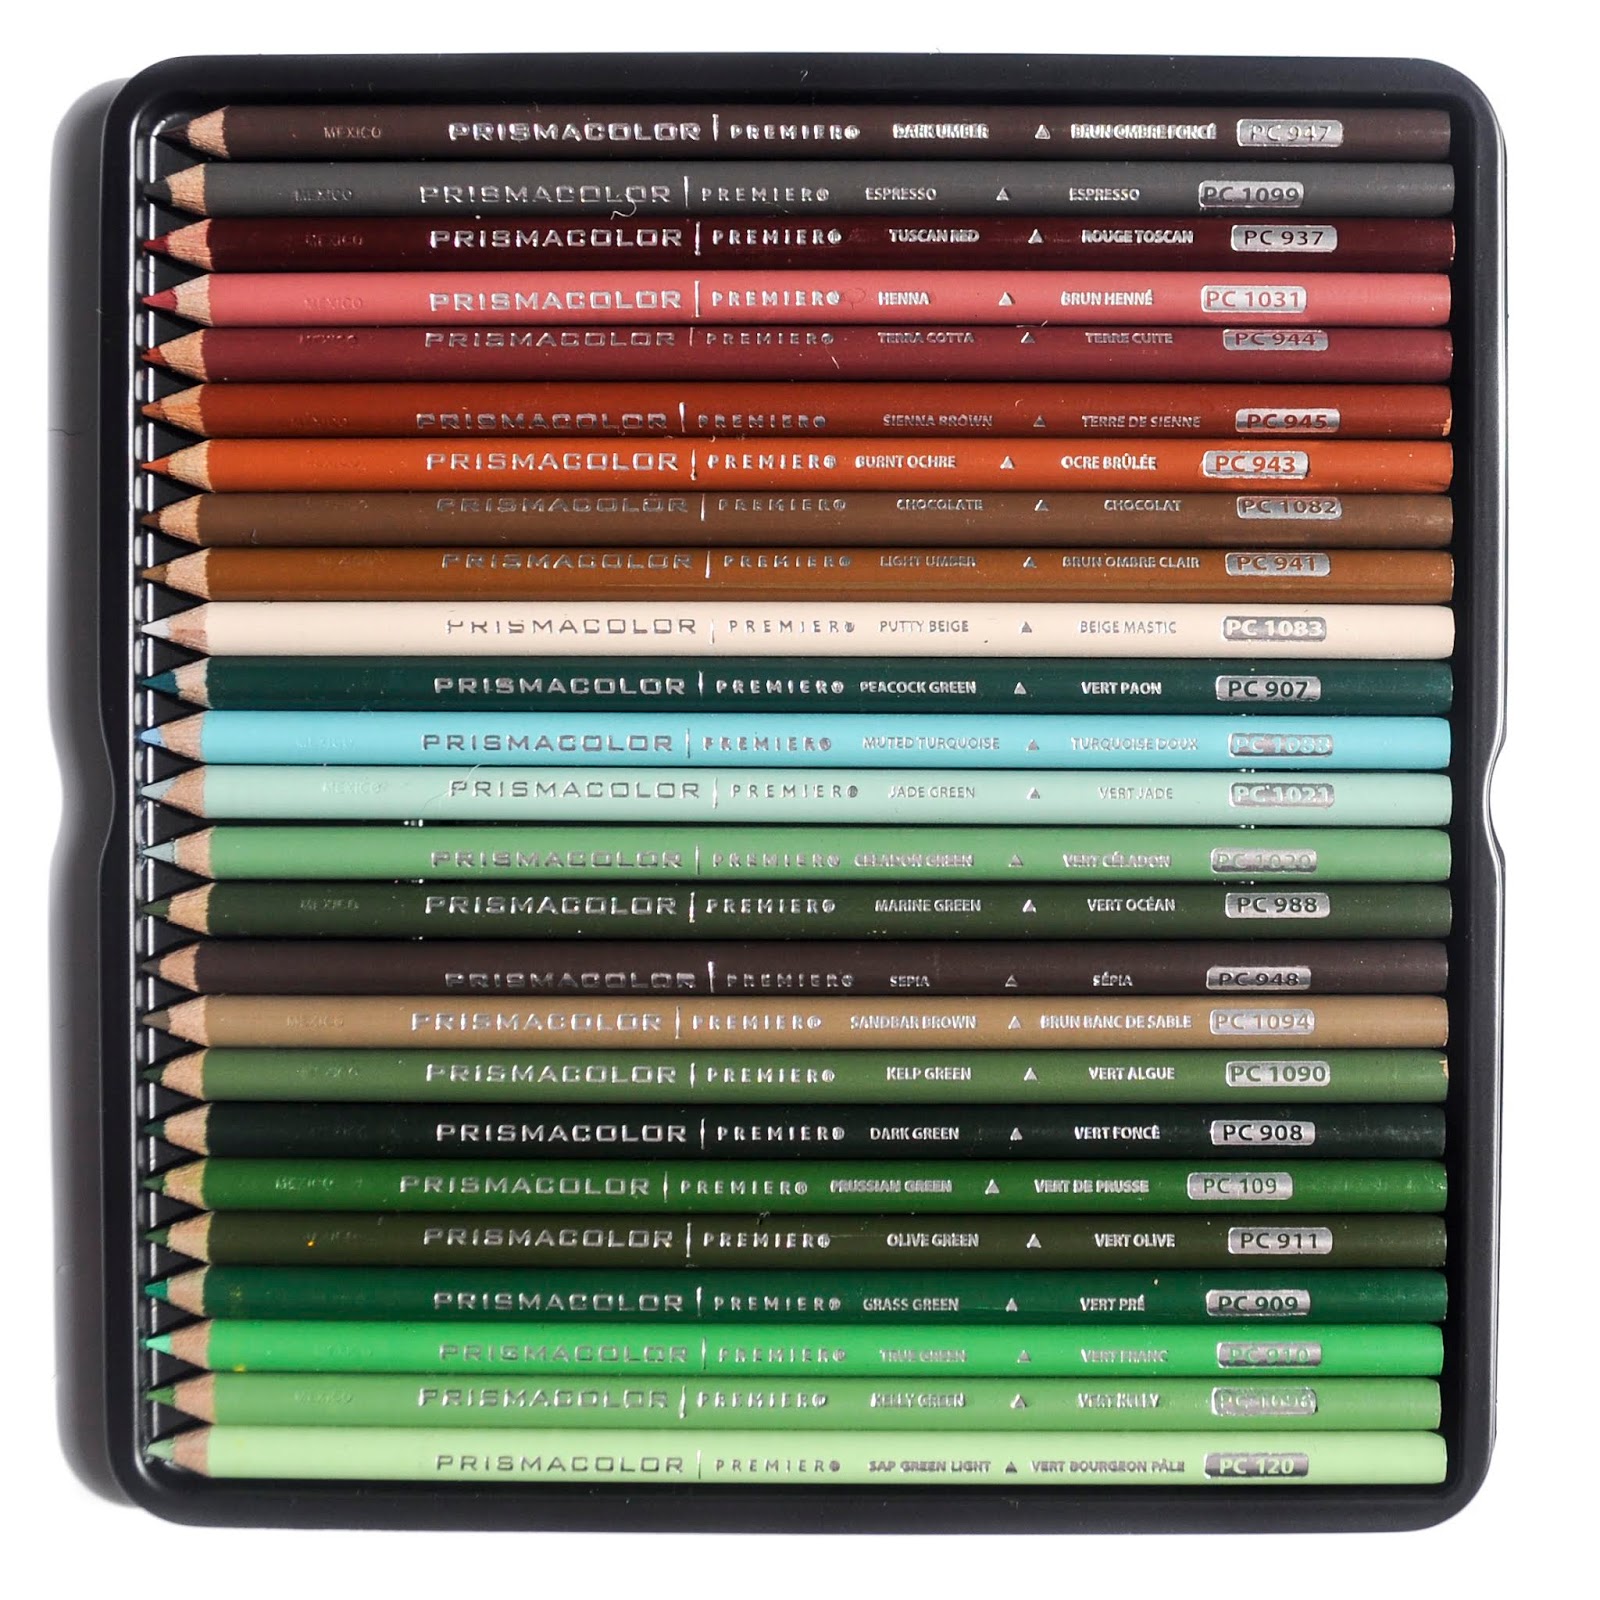 Prismacolor Premier Colored Pencils 150 Pack, Pencil Case & Bag for Coloring  Books at Sugar Hiccups 